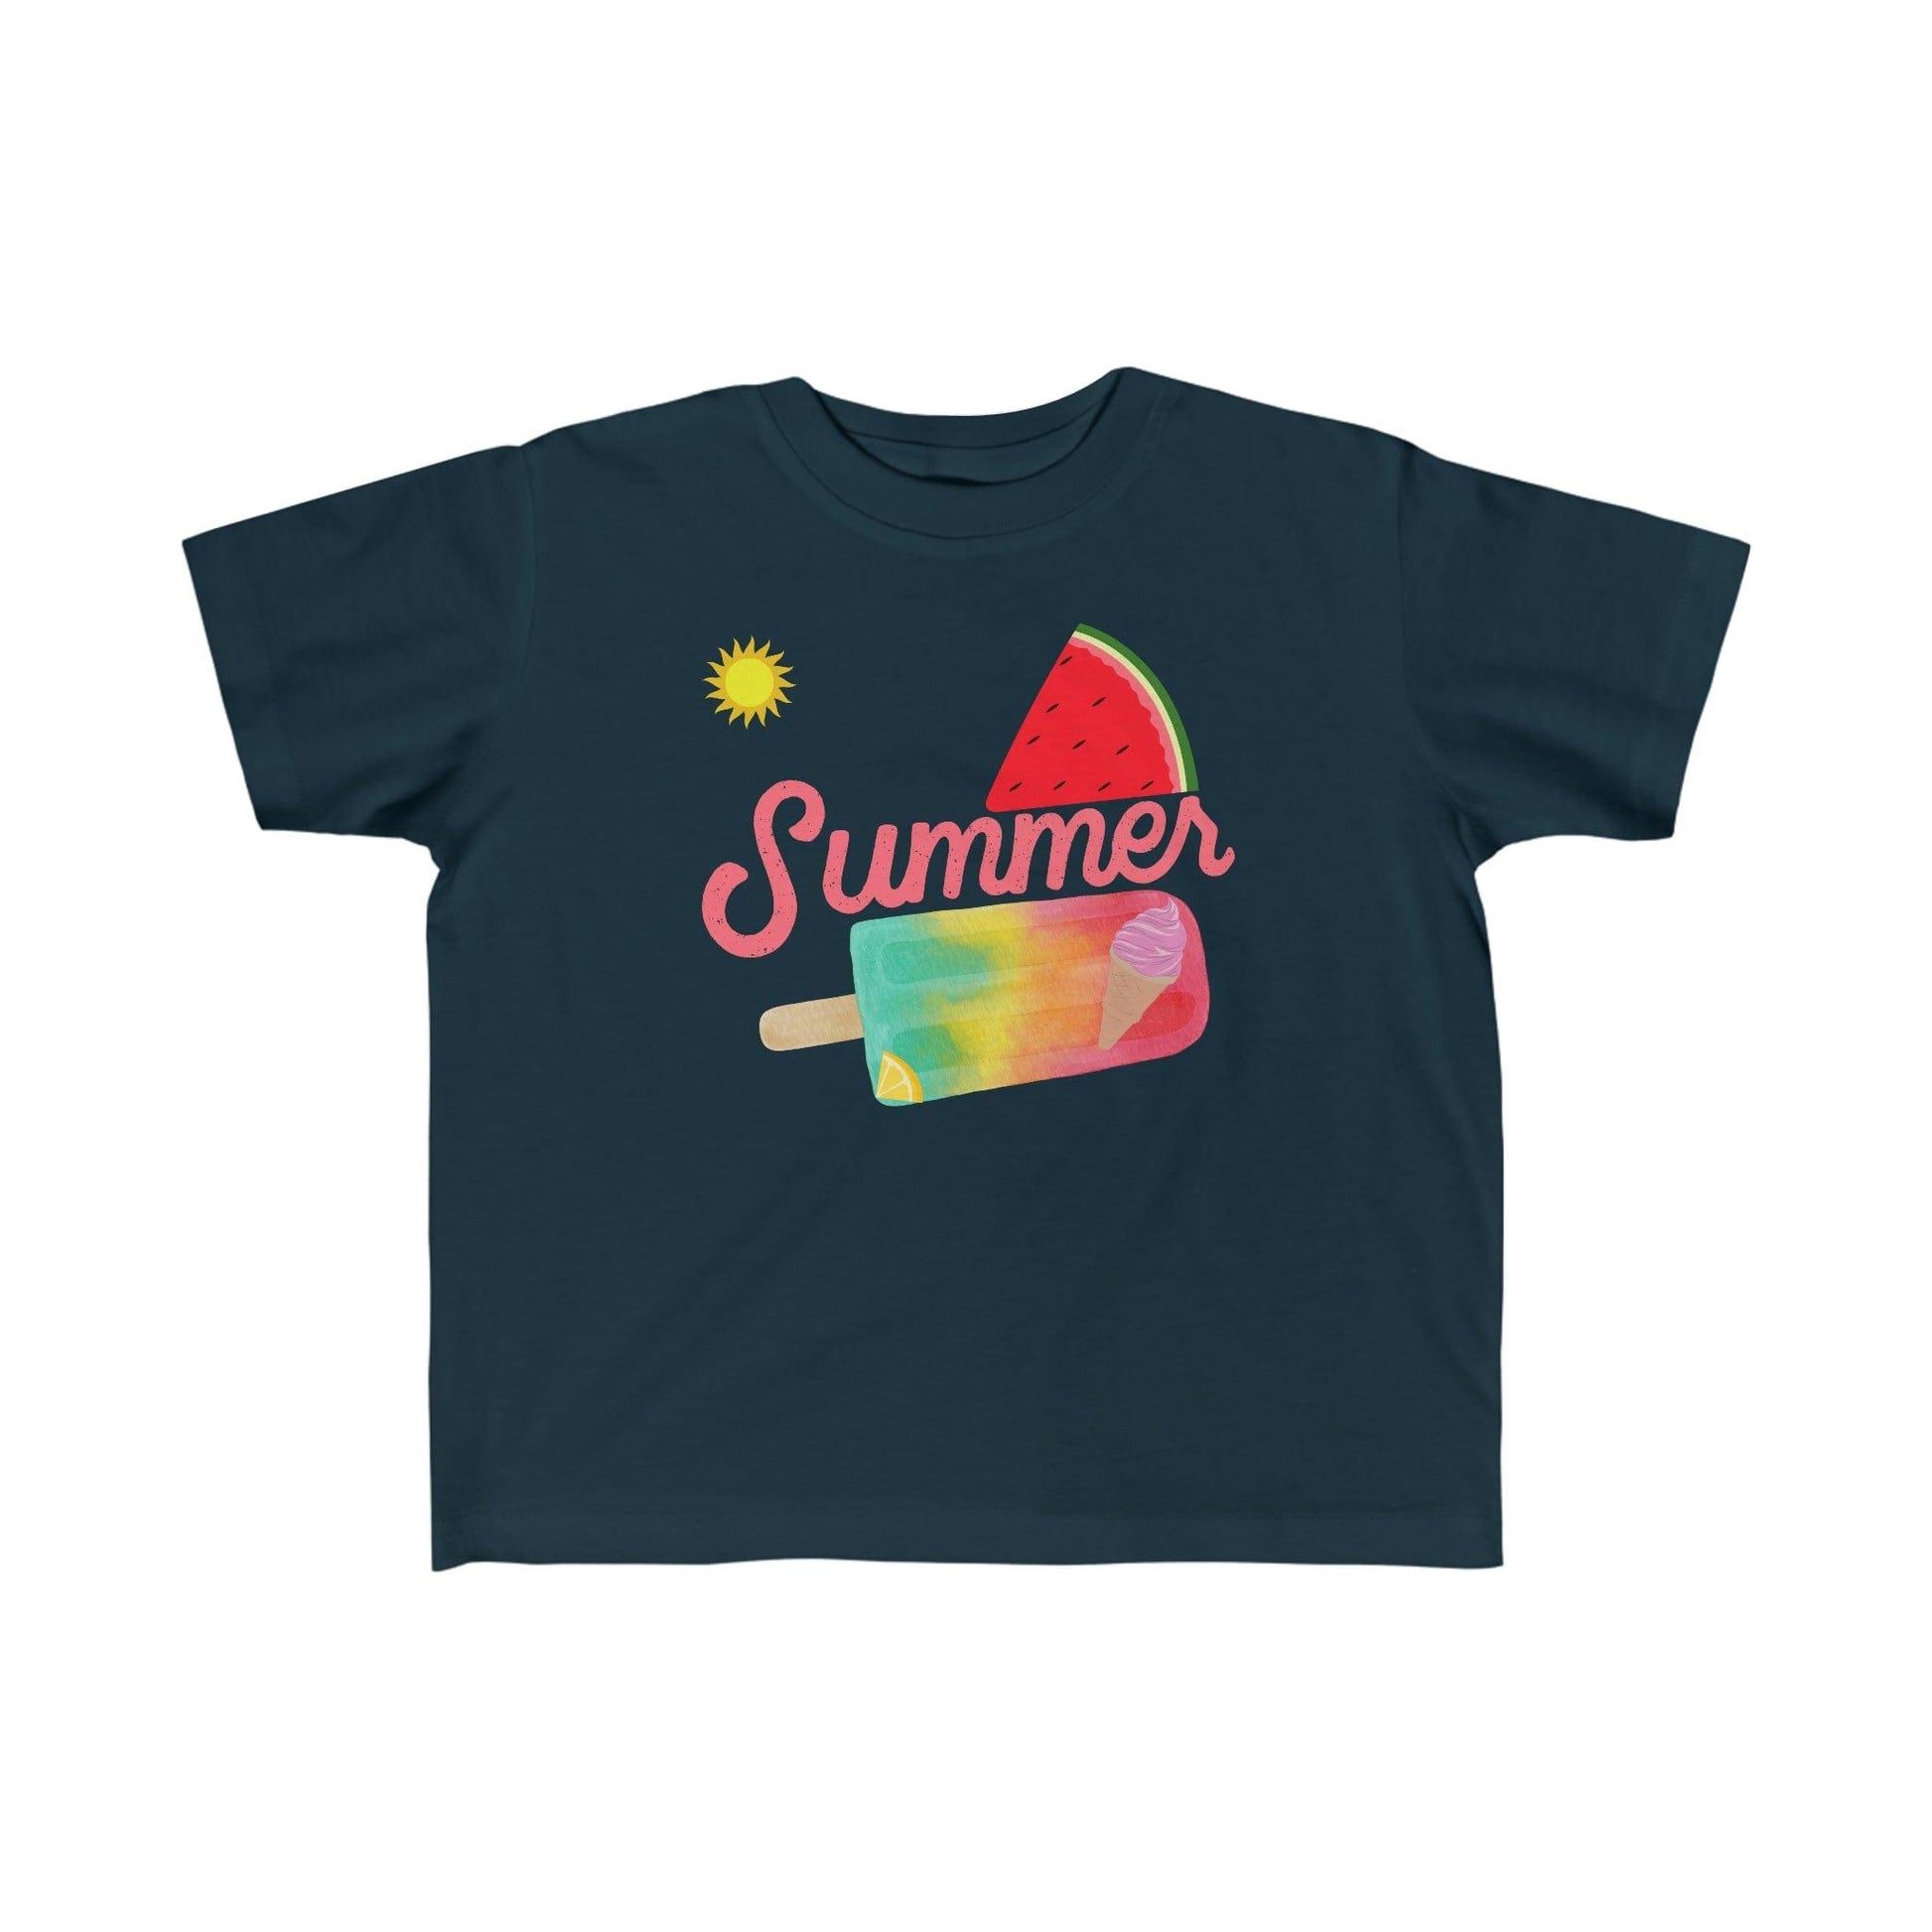 Toddler's Summer Tee, Summer Shirt for Toddlers Birthday gift Kids Tshirt - Giftsmojo